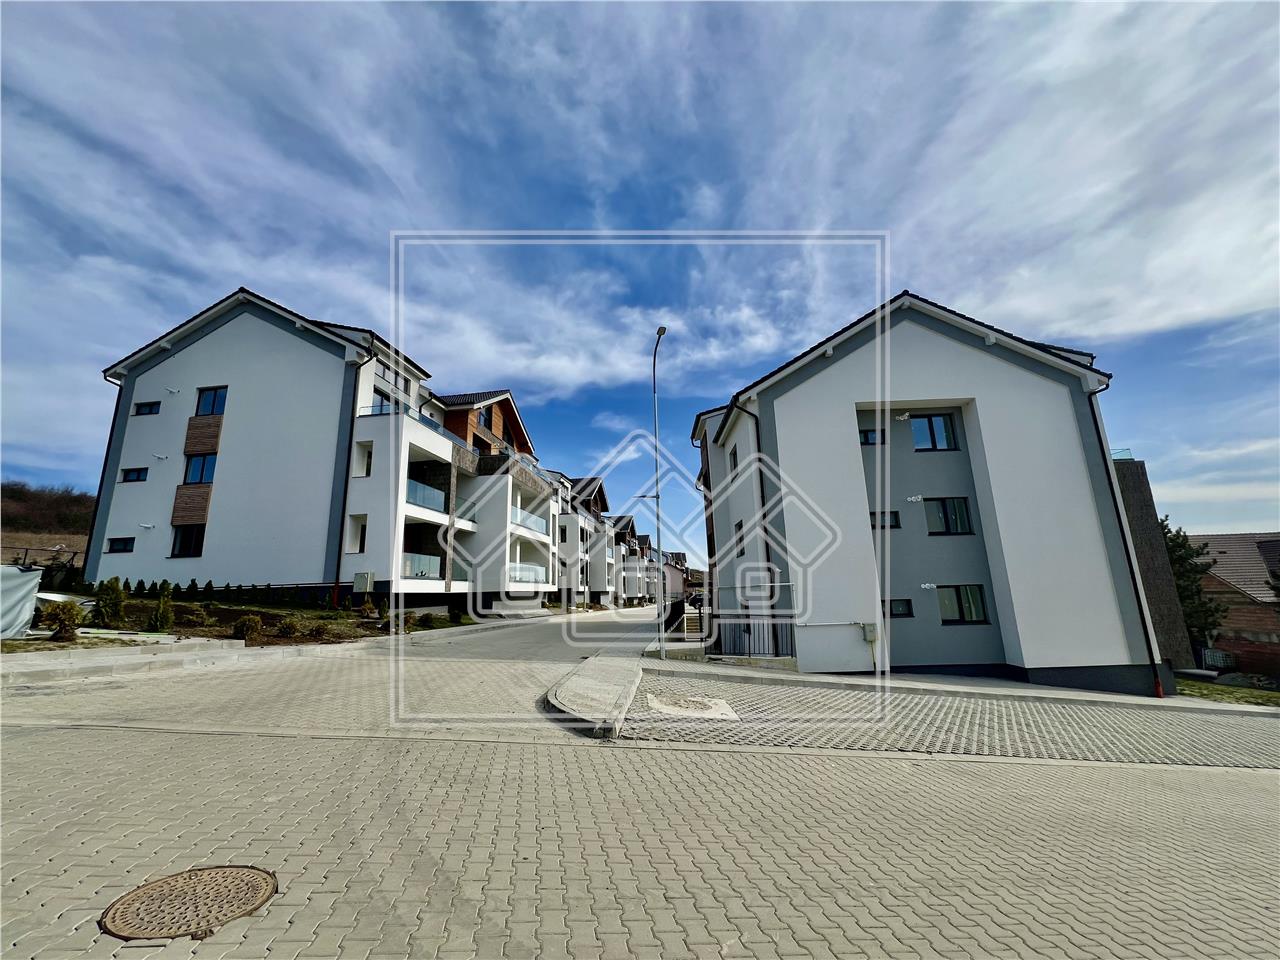 3-room apartment for sale in Sibiu - Cristian - Useful area 75.71 sqm